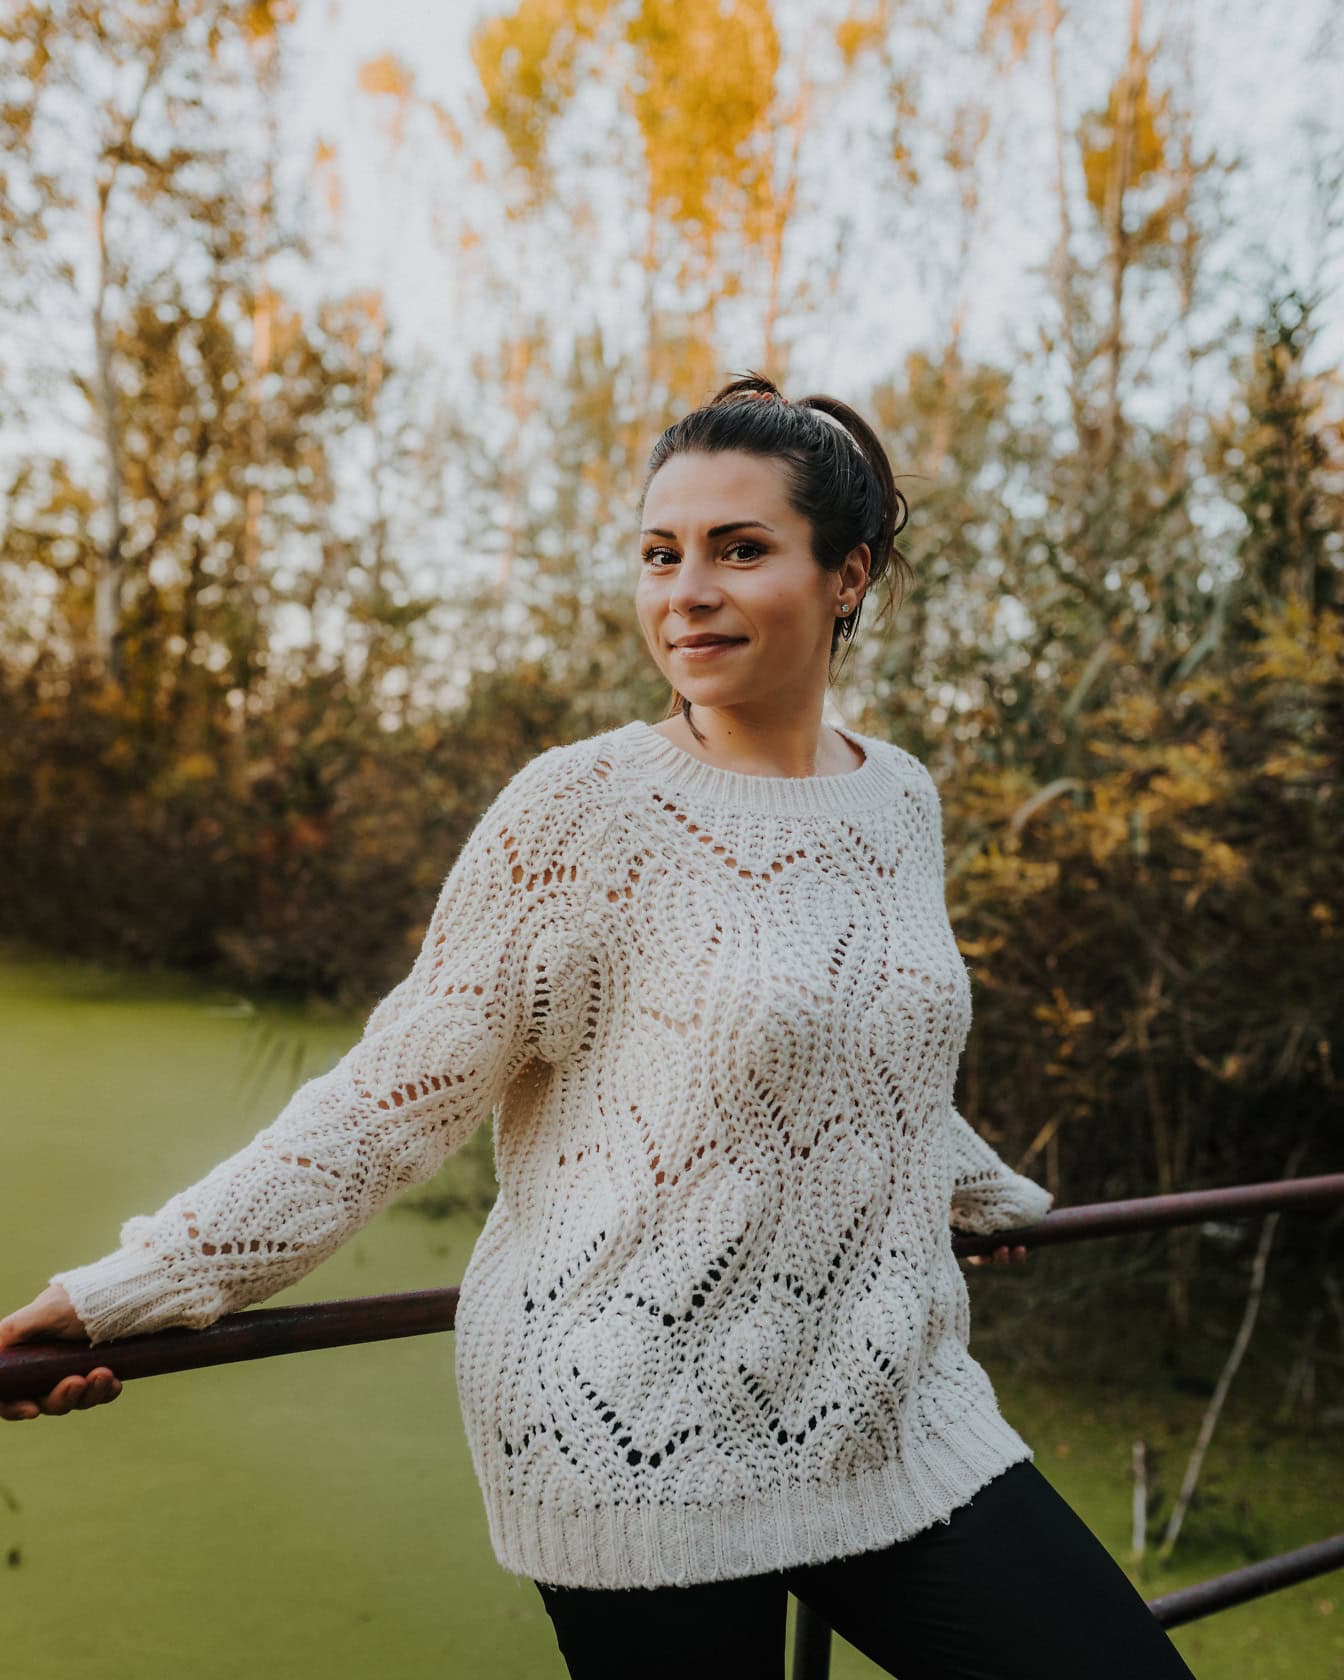 Brunette cantik dengan riasan bijaksana dalam sweter putih buatan tangan saat dia bersandar di pagar jembatan di seberang kanal